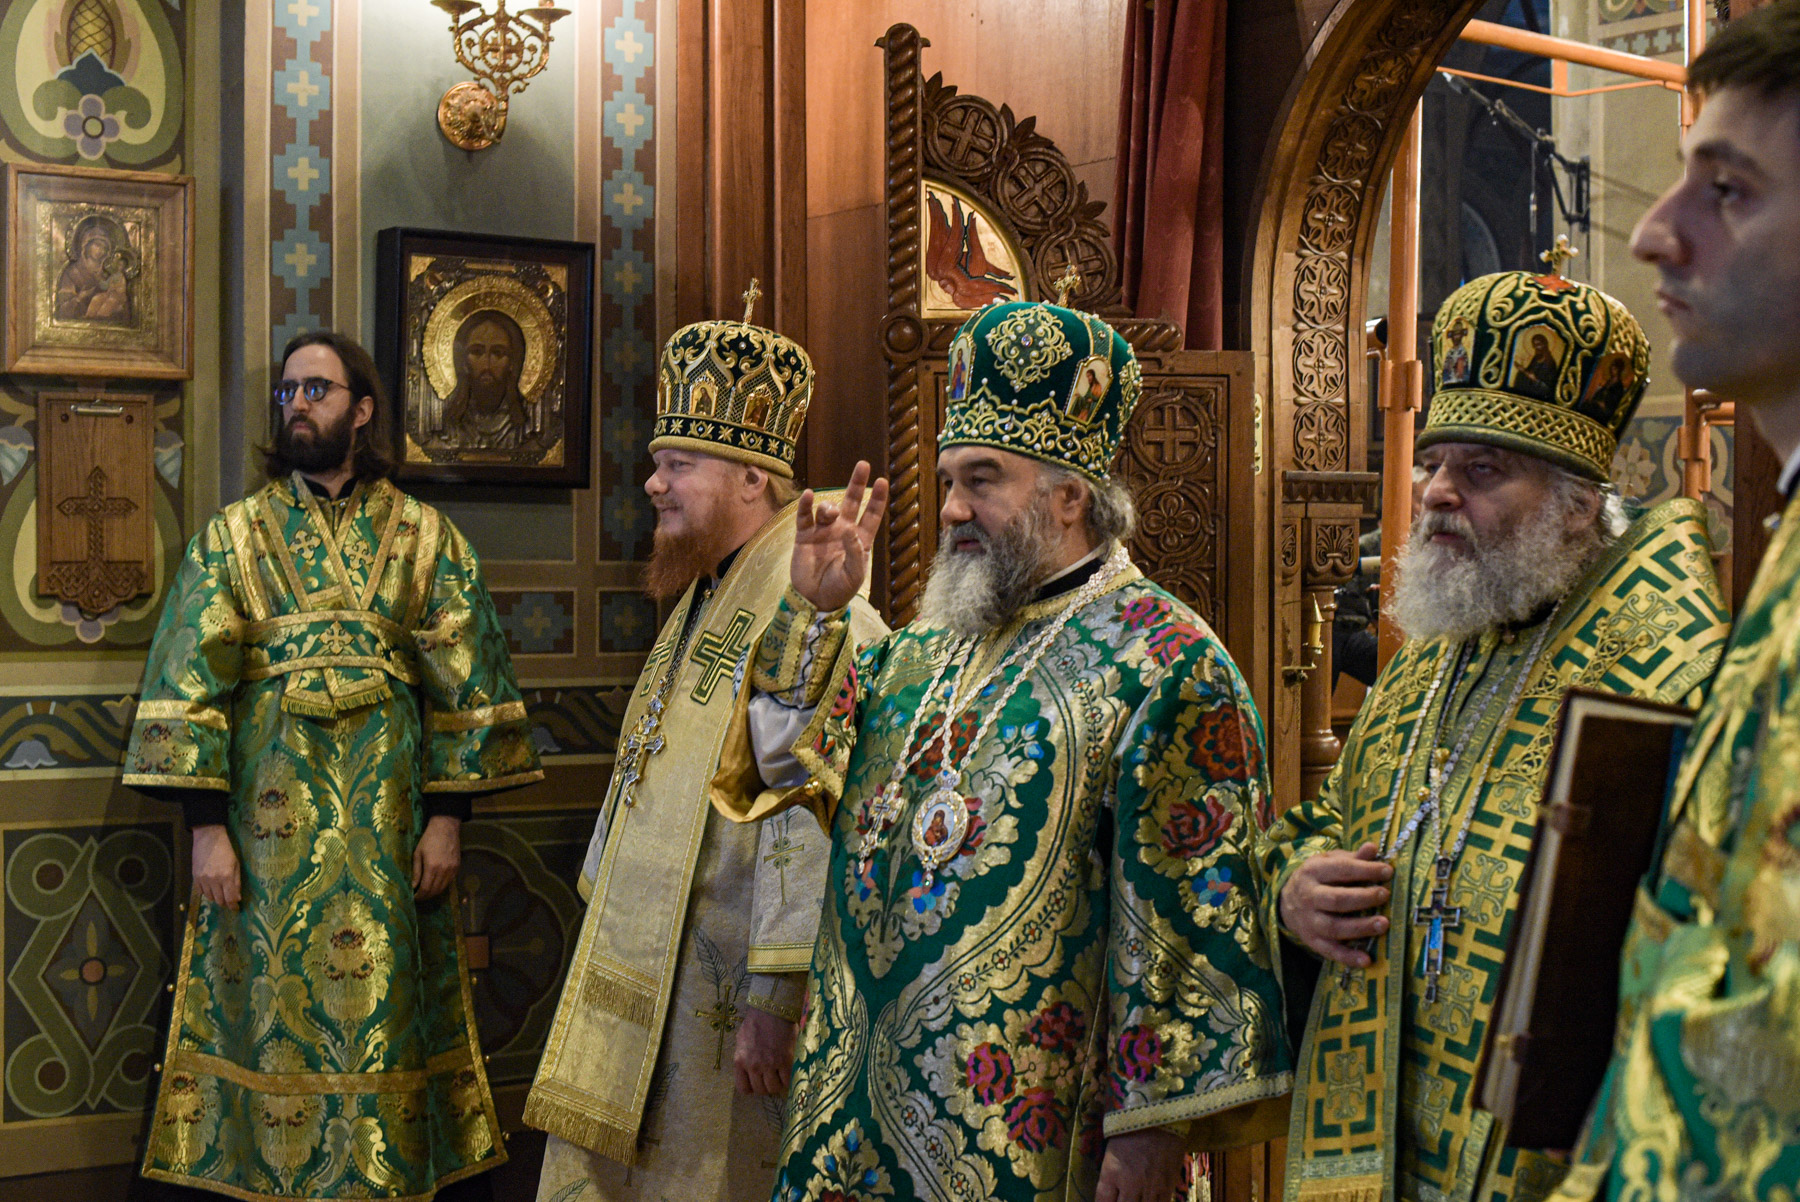 photos of orthodox christmas 0206 2